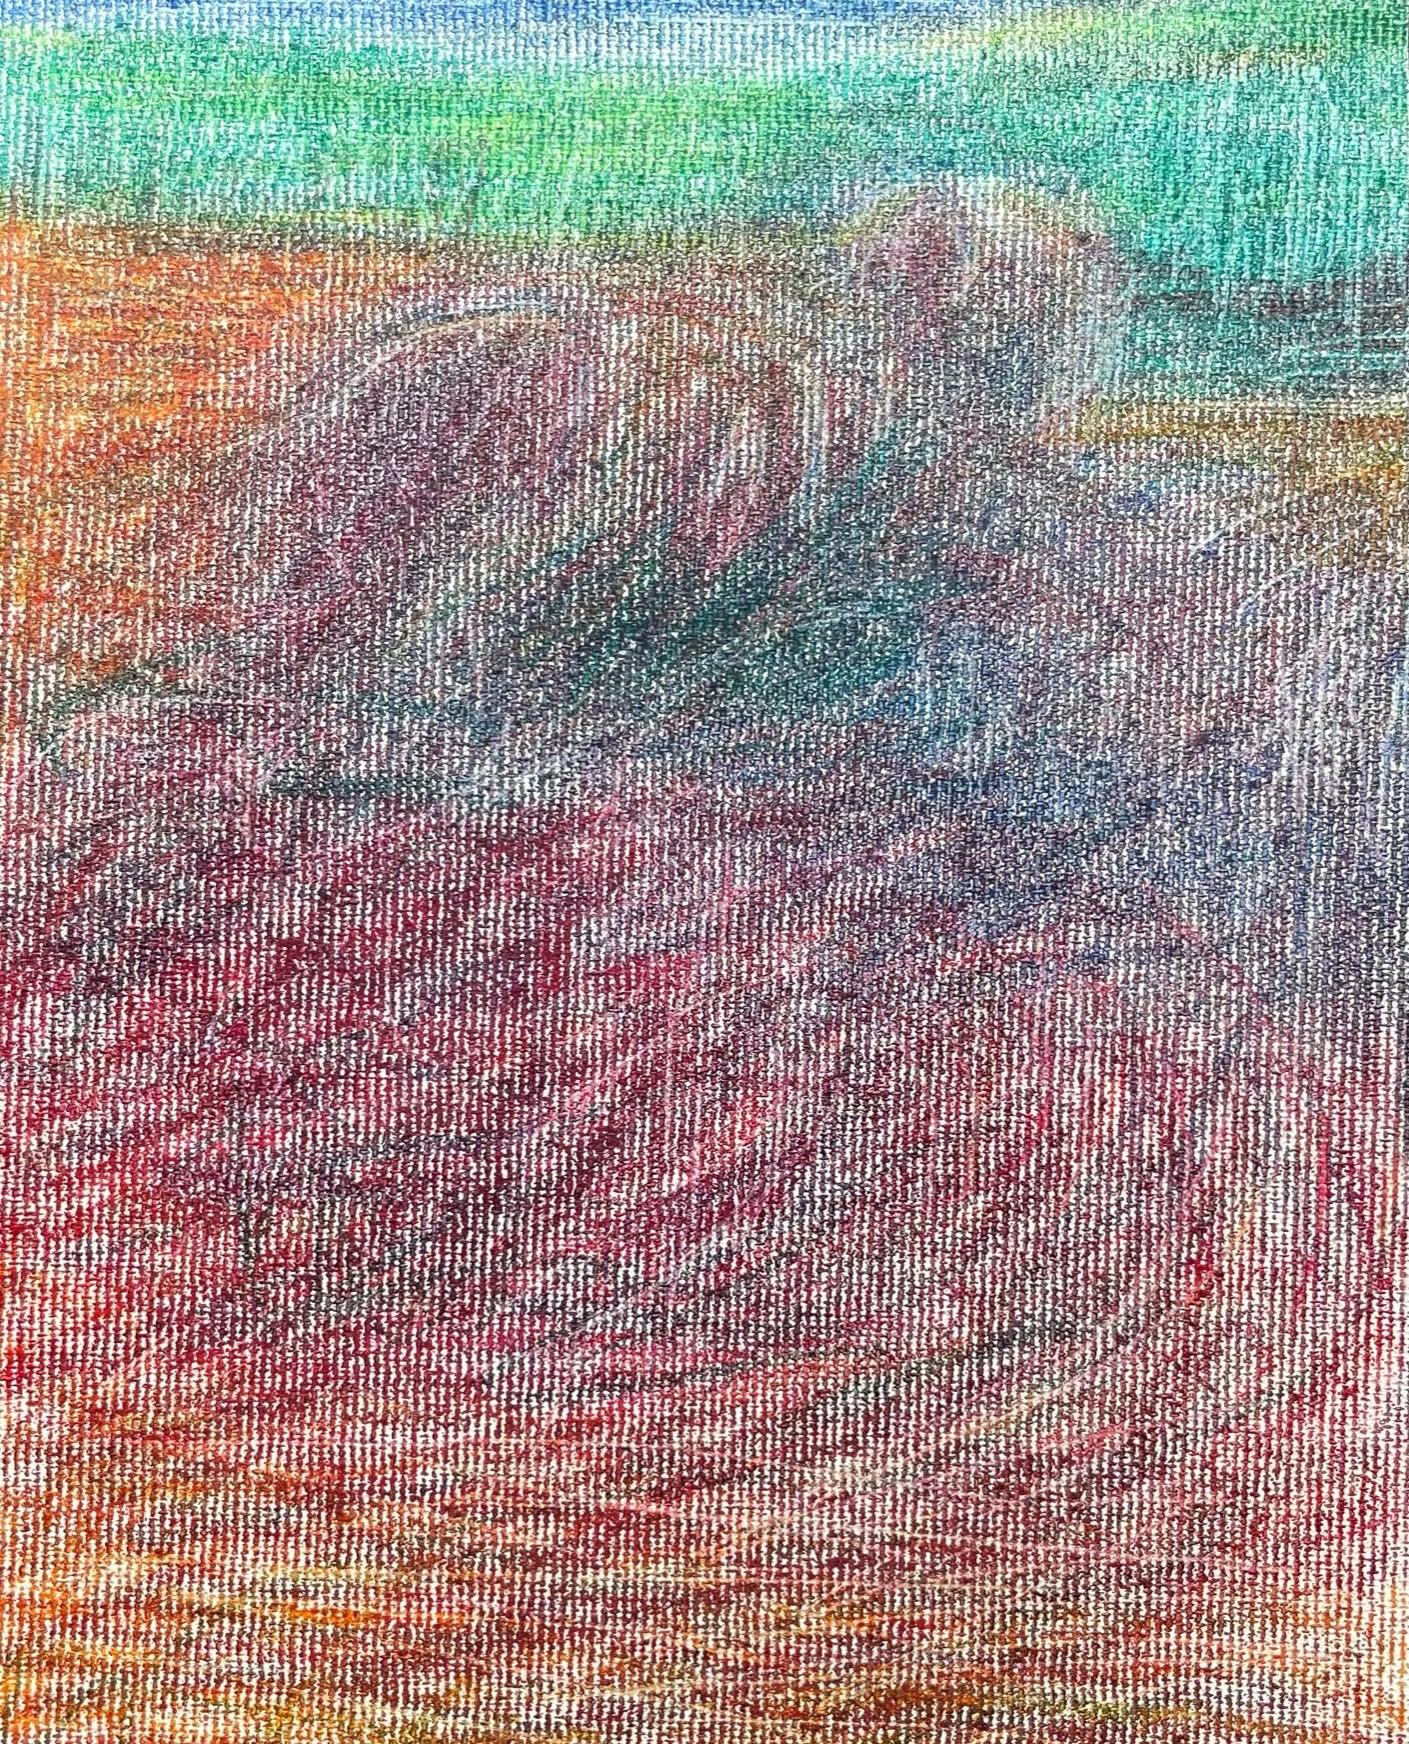 Body in the Field #9 - Landscape, Orange, Red, Coloured pencil  - Gray Landscape Art by Zsolt Berszán